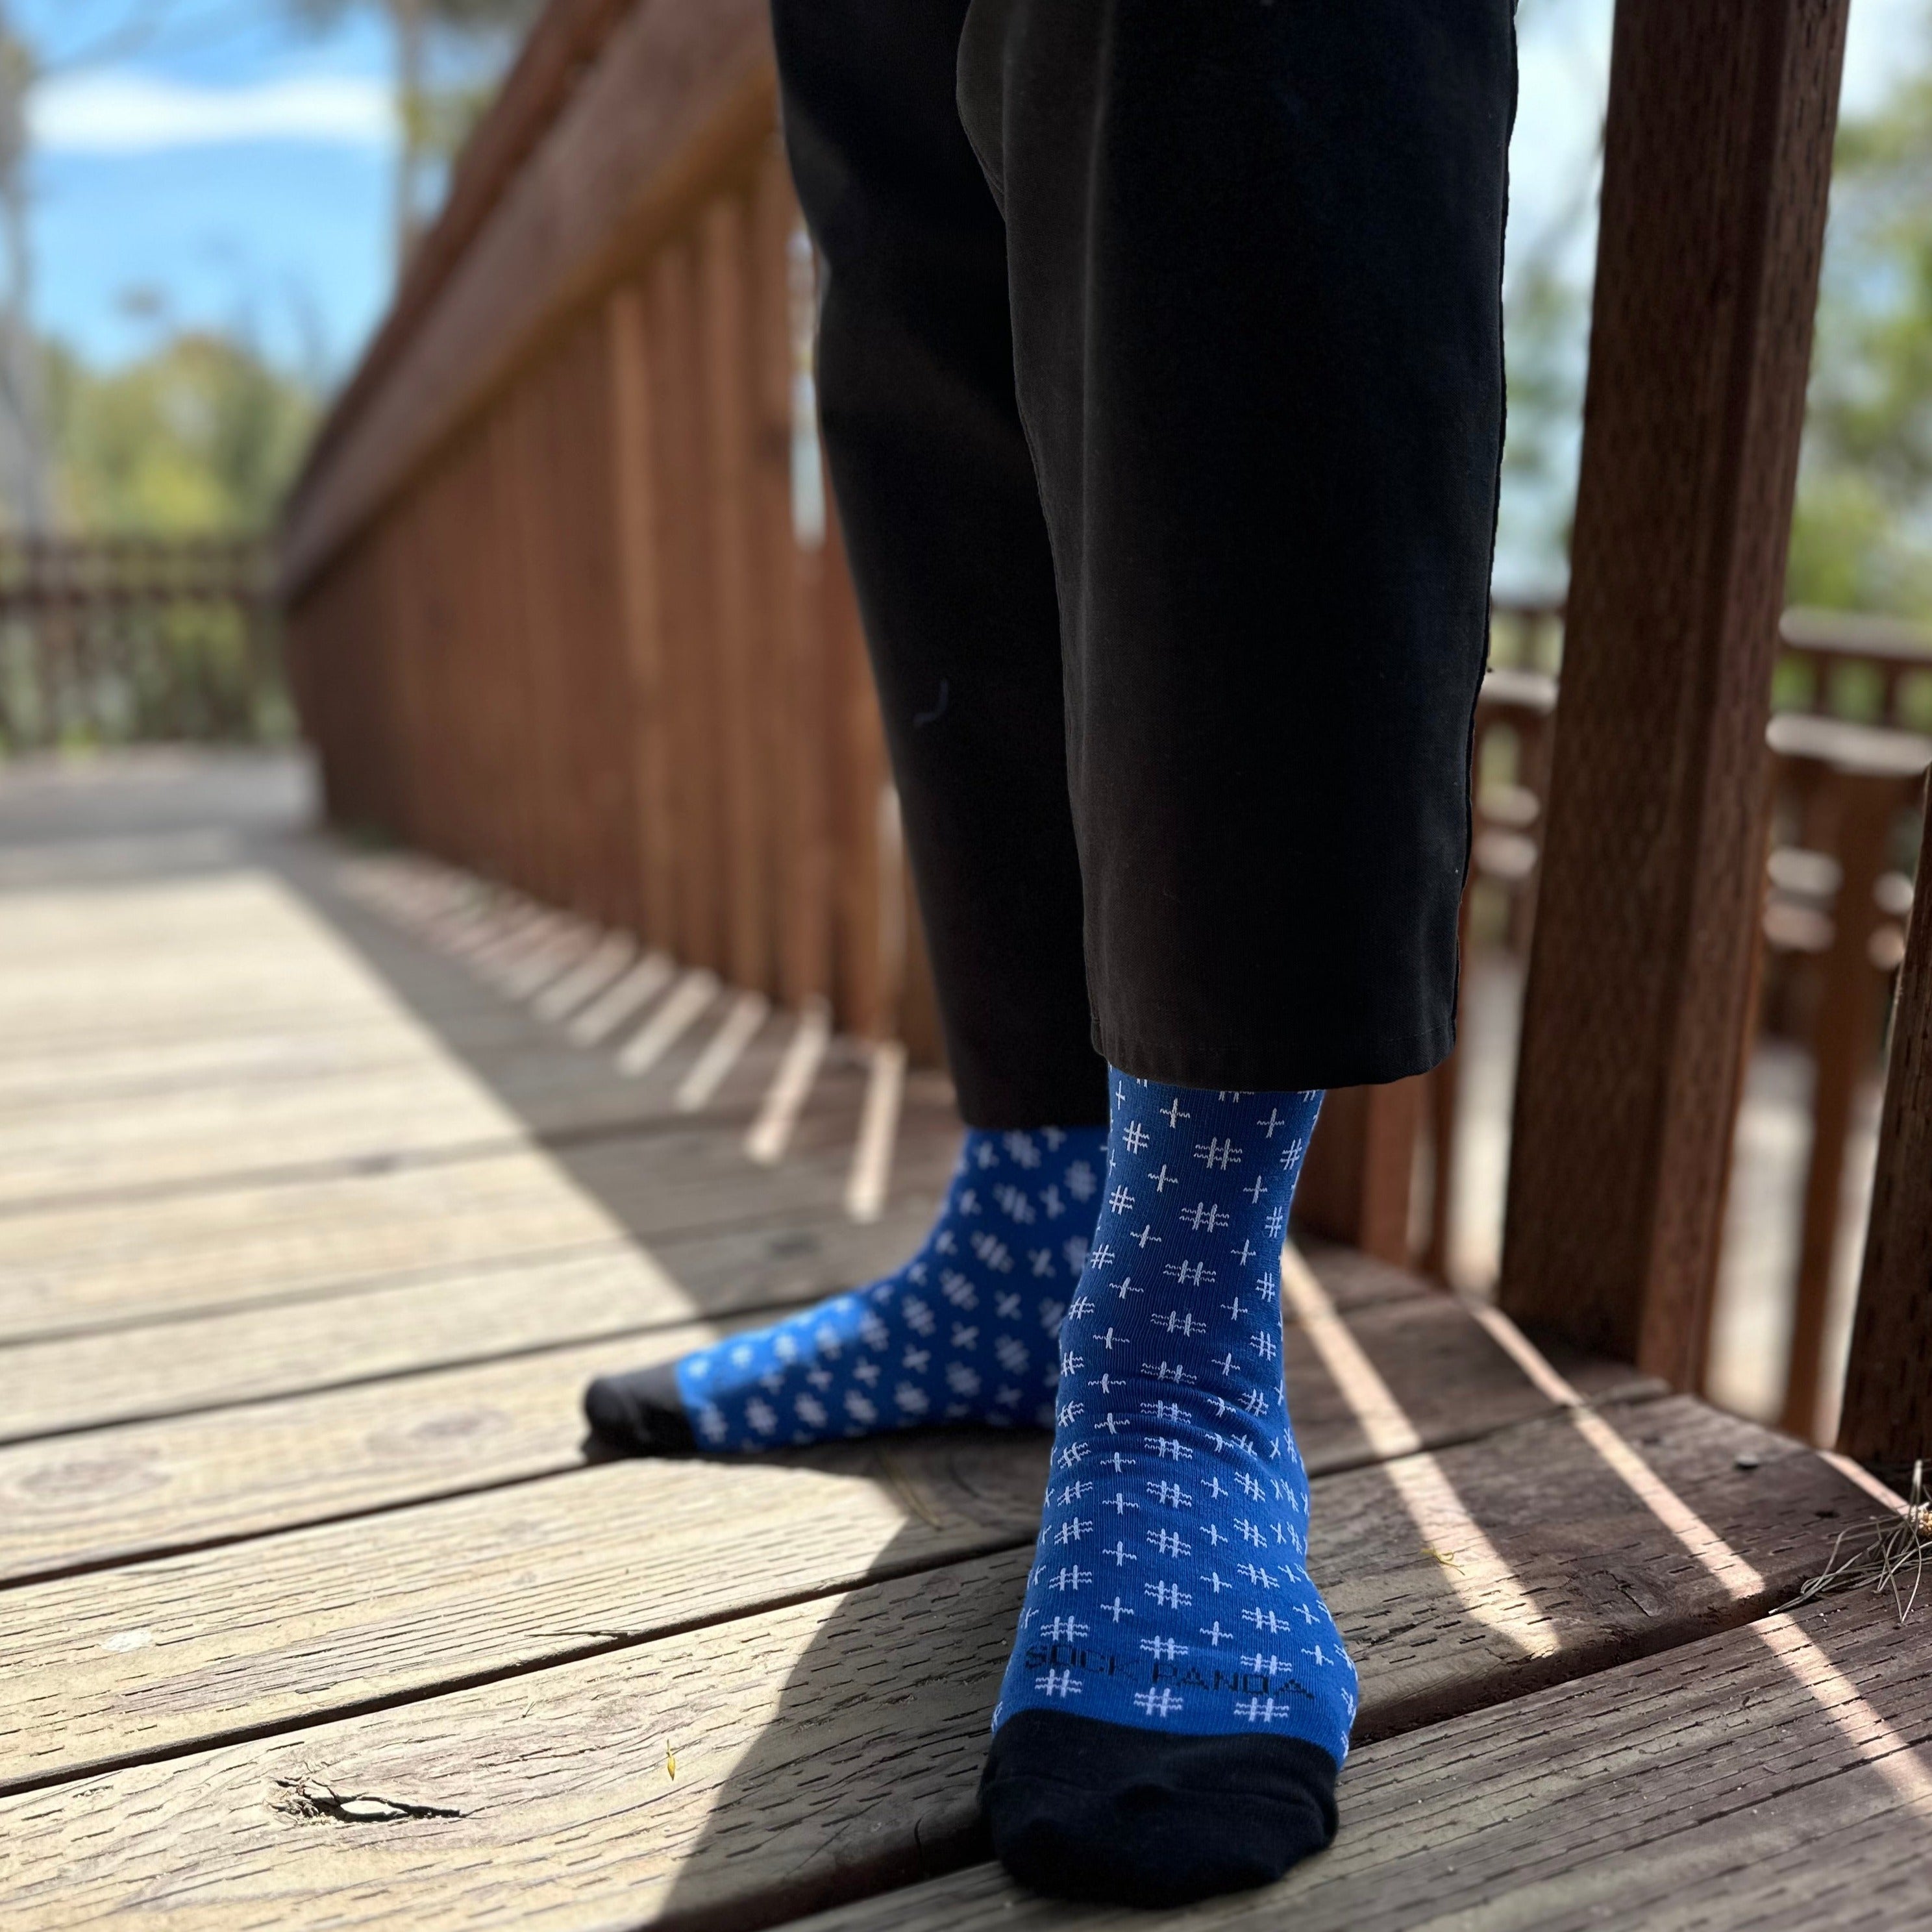 Blue Hashtag Patterned Socks from the Sock Panda